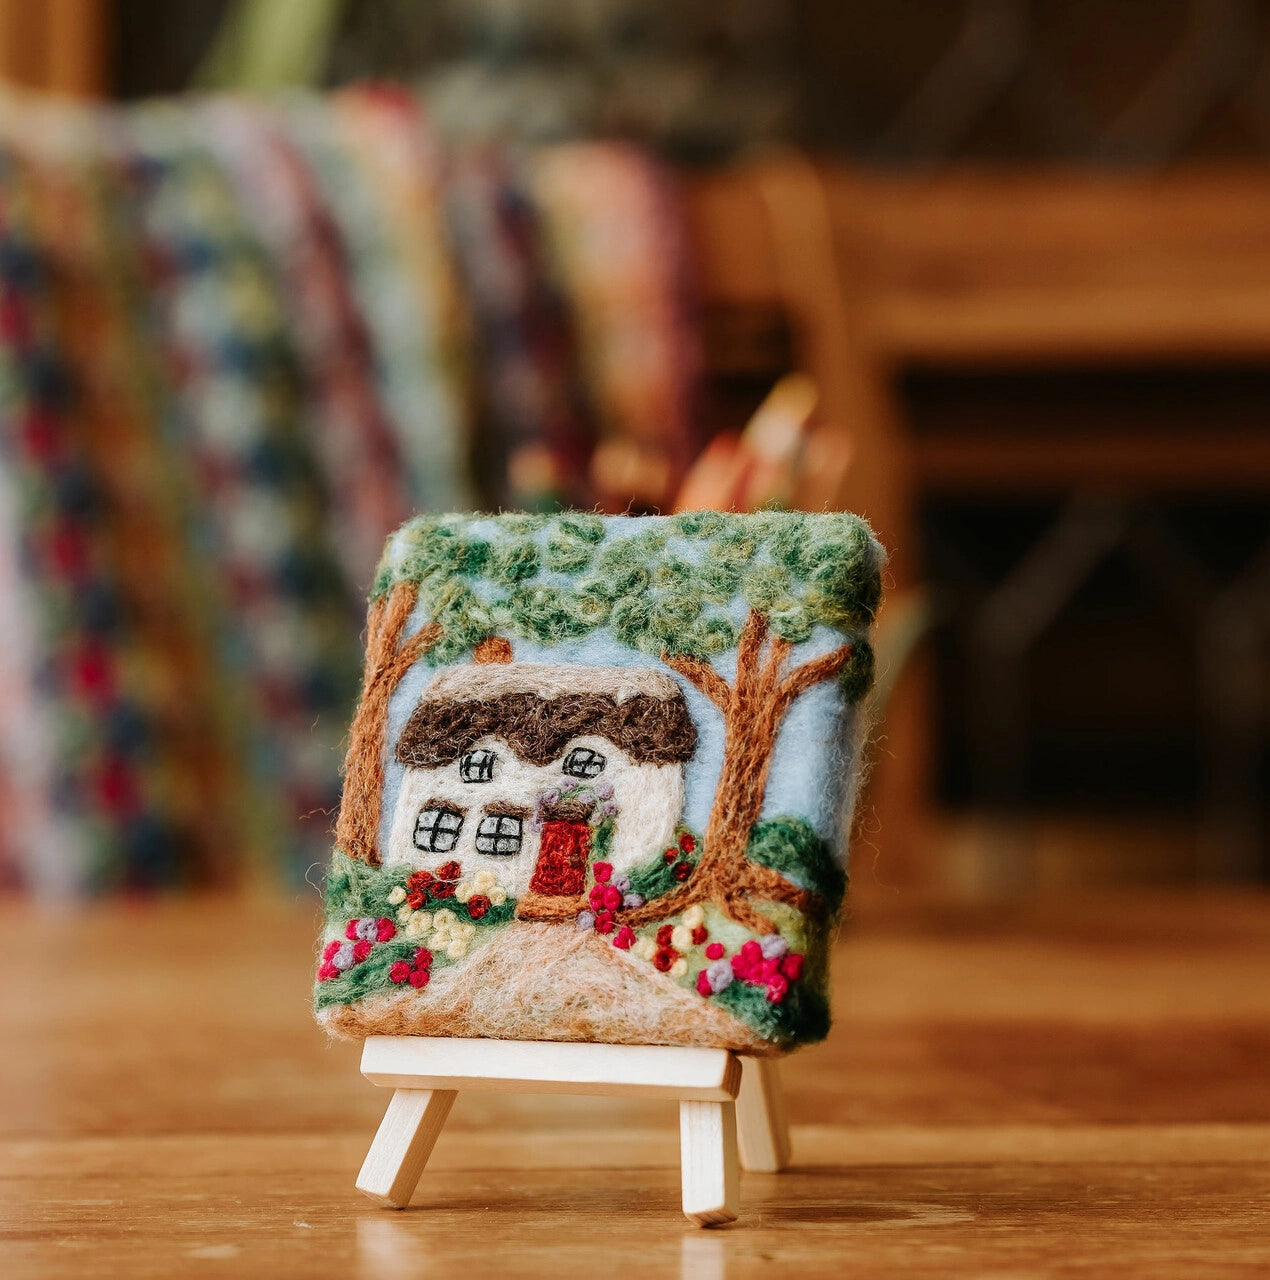 Crafty Kit Company Paint with Wool:Mini Masterpiece Thatched Cottage Needle felting kit